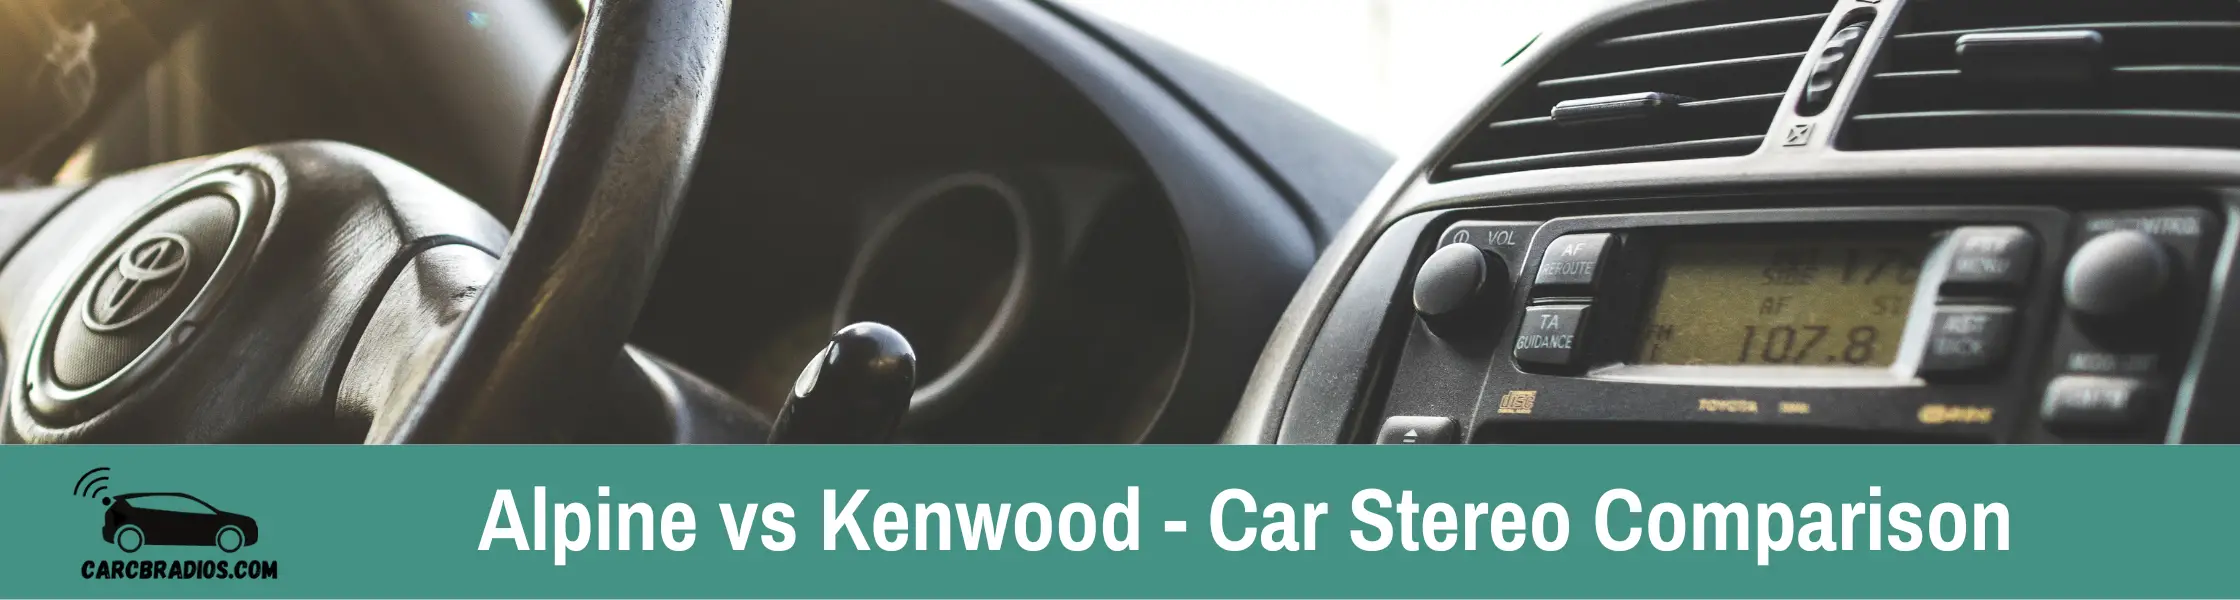 Alpine vs Kenwood - Car Stereo Comparison: